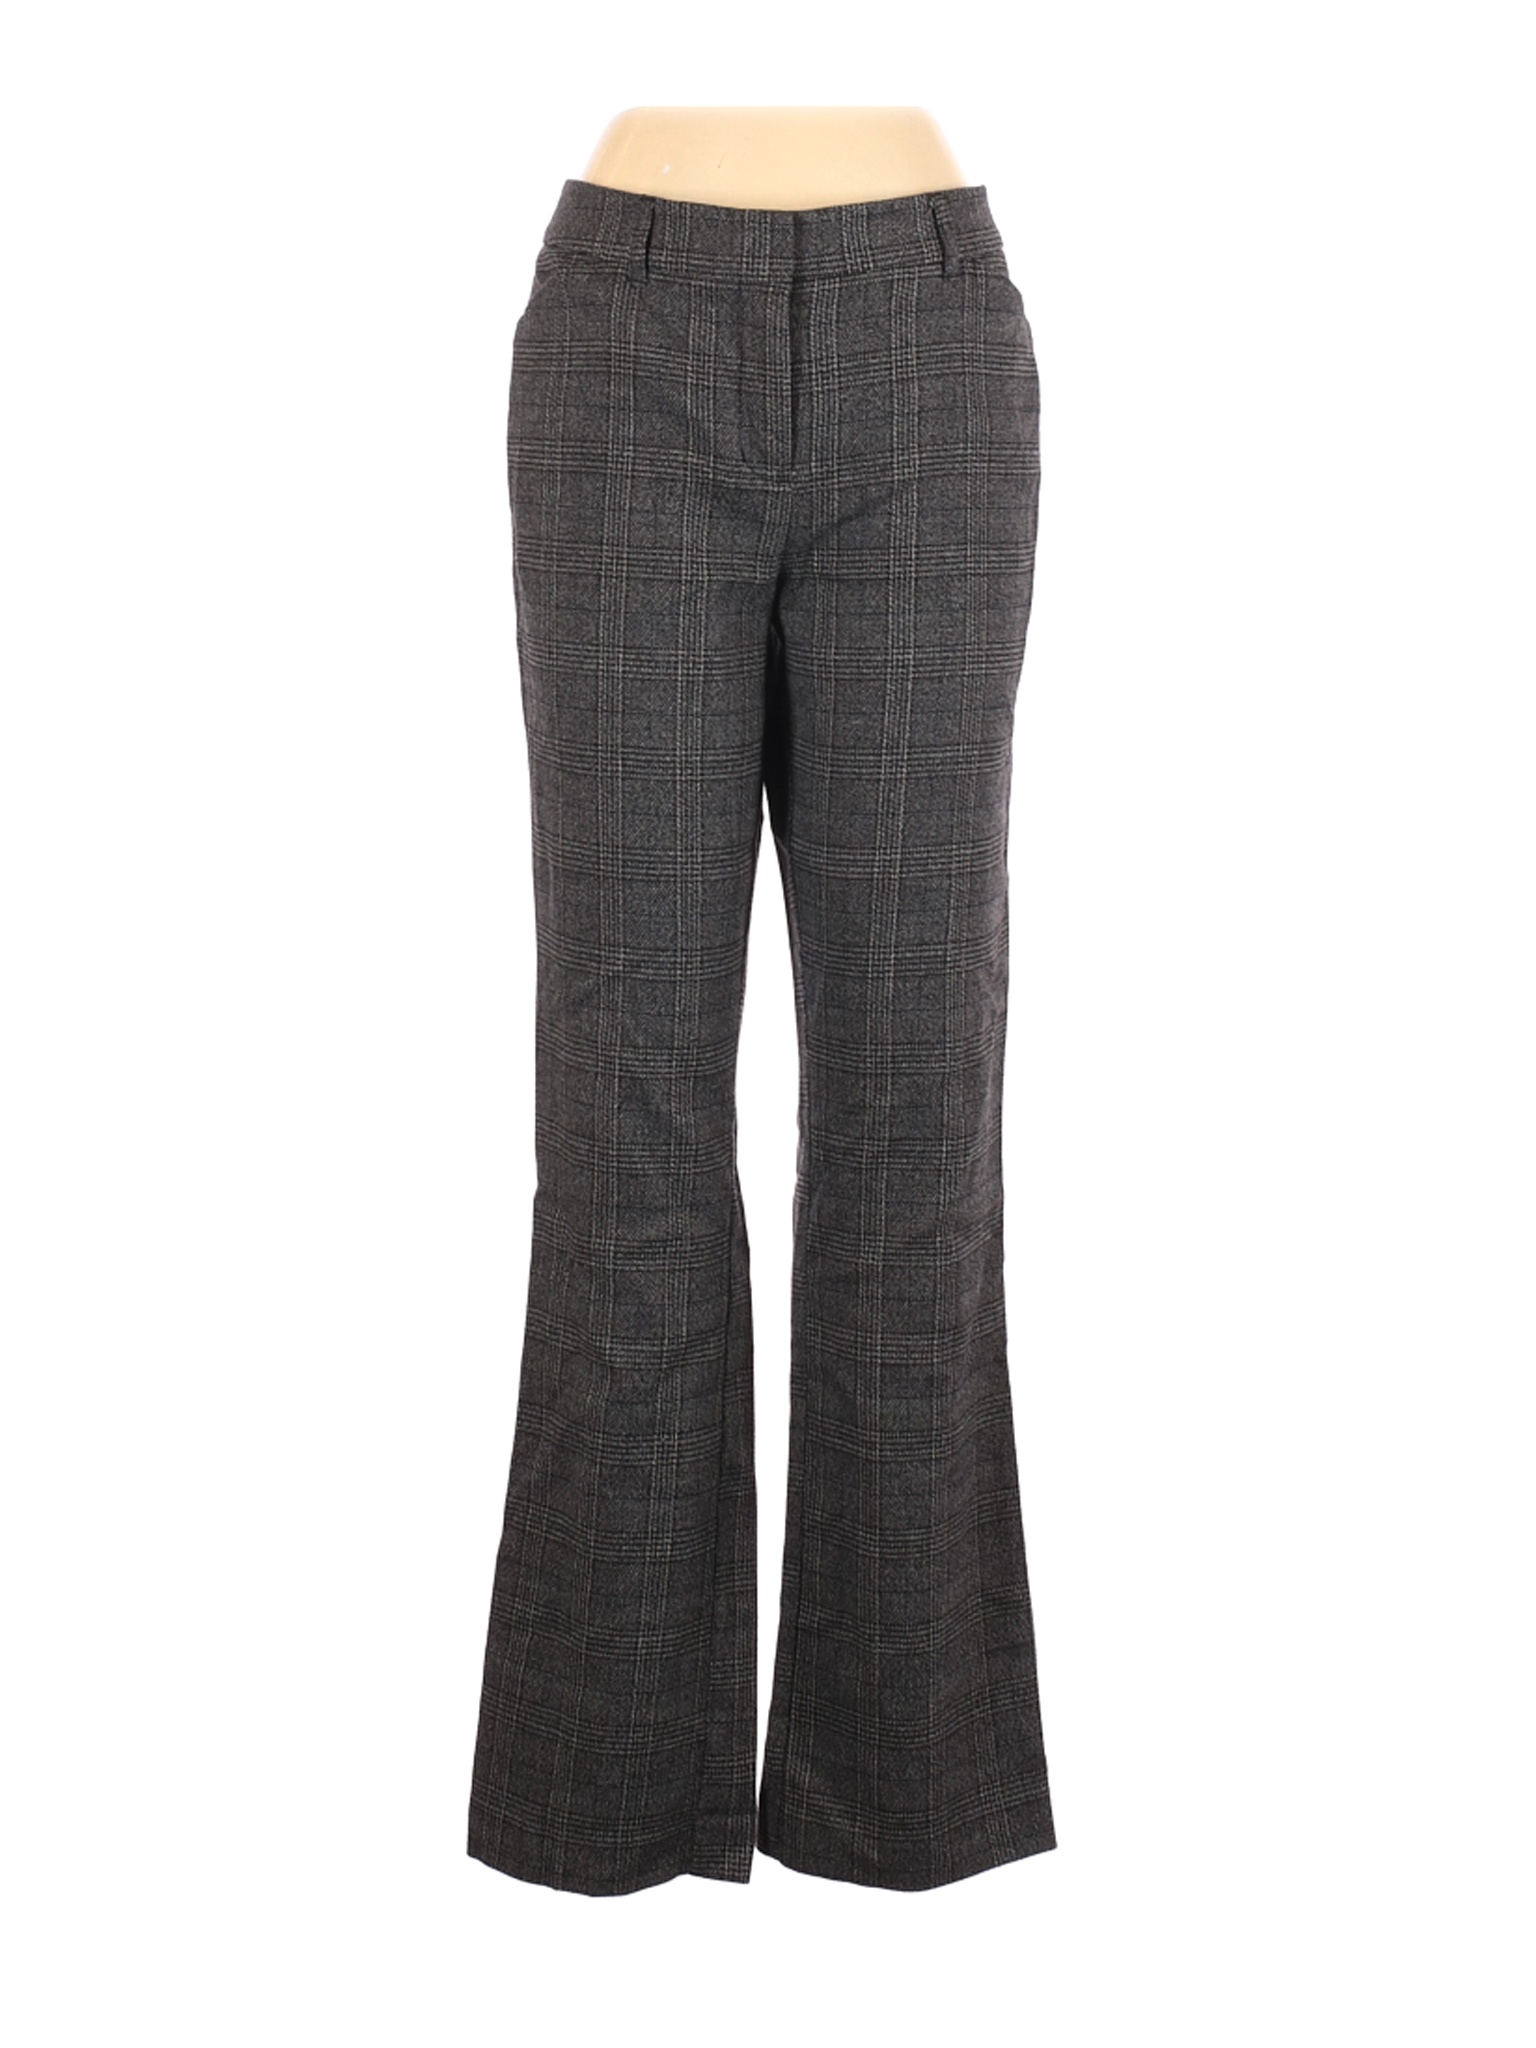 Maurices Women Gray Dress Pants 9 | eBay